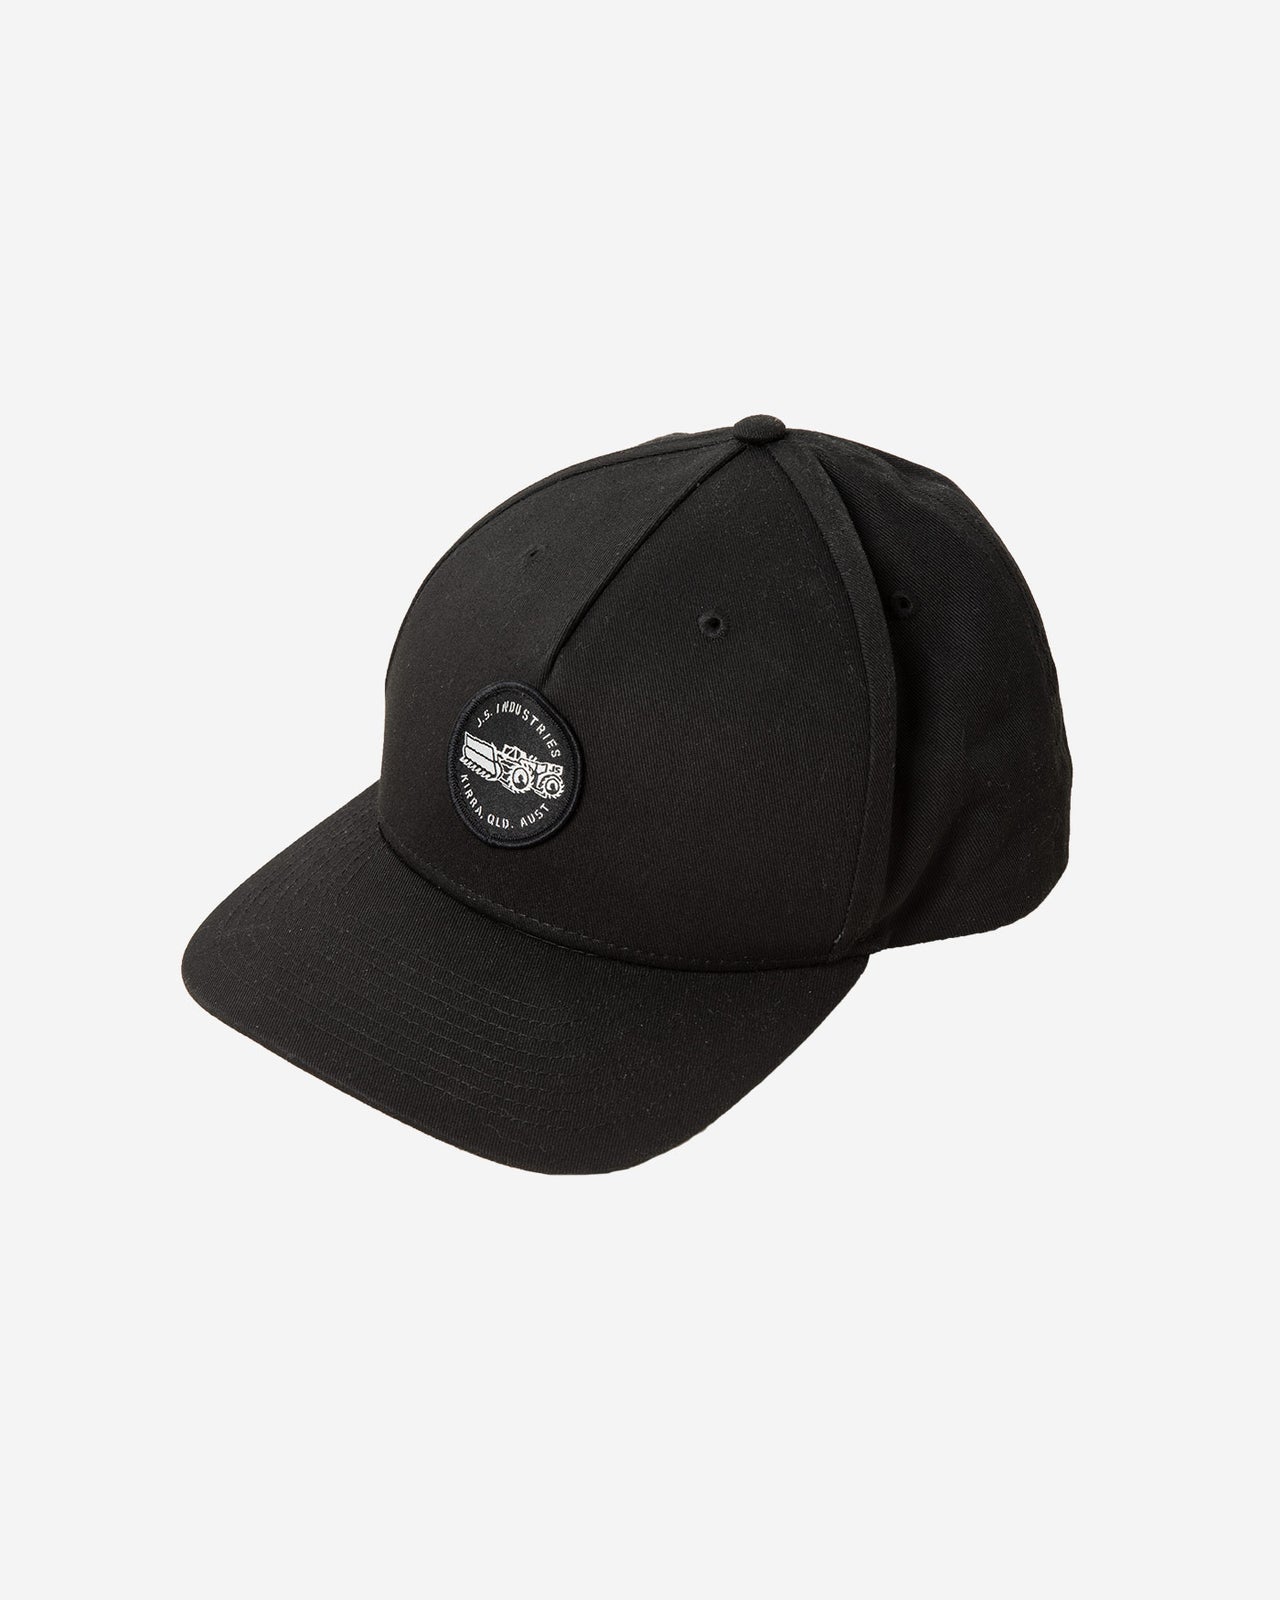 BARON CAP